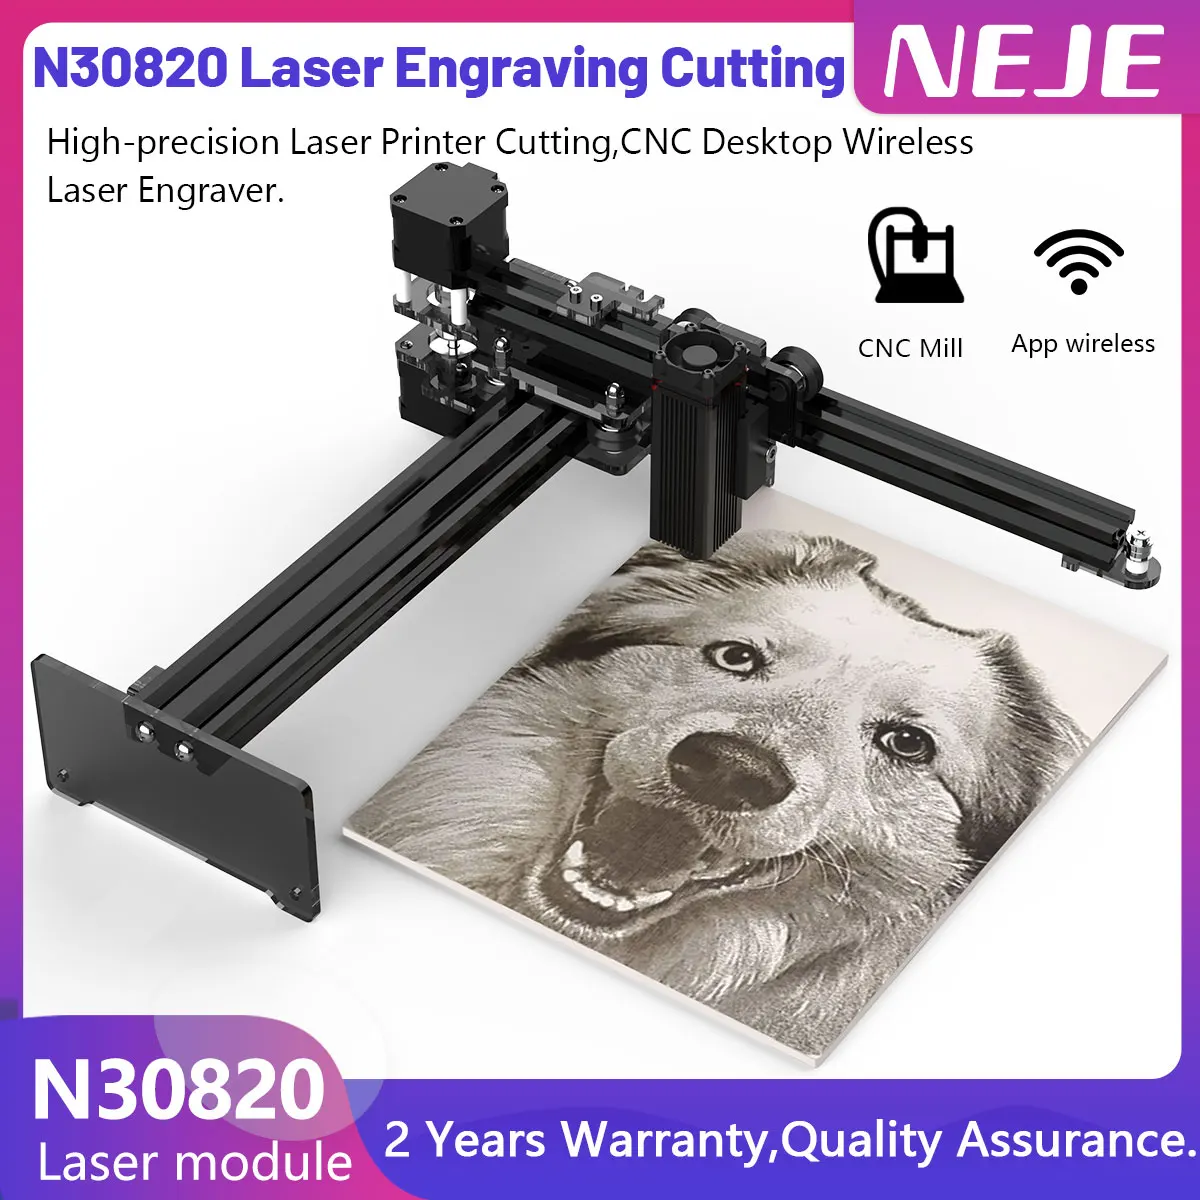 NEJE 3 Laser Engraver Air assist Cutter-Laser Engraving Machine Cutting 32-Bit Printer-Laser CNC Router LightBurn GRBL